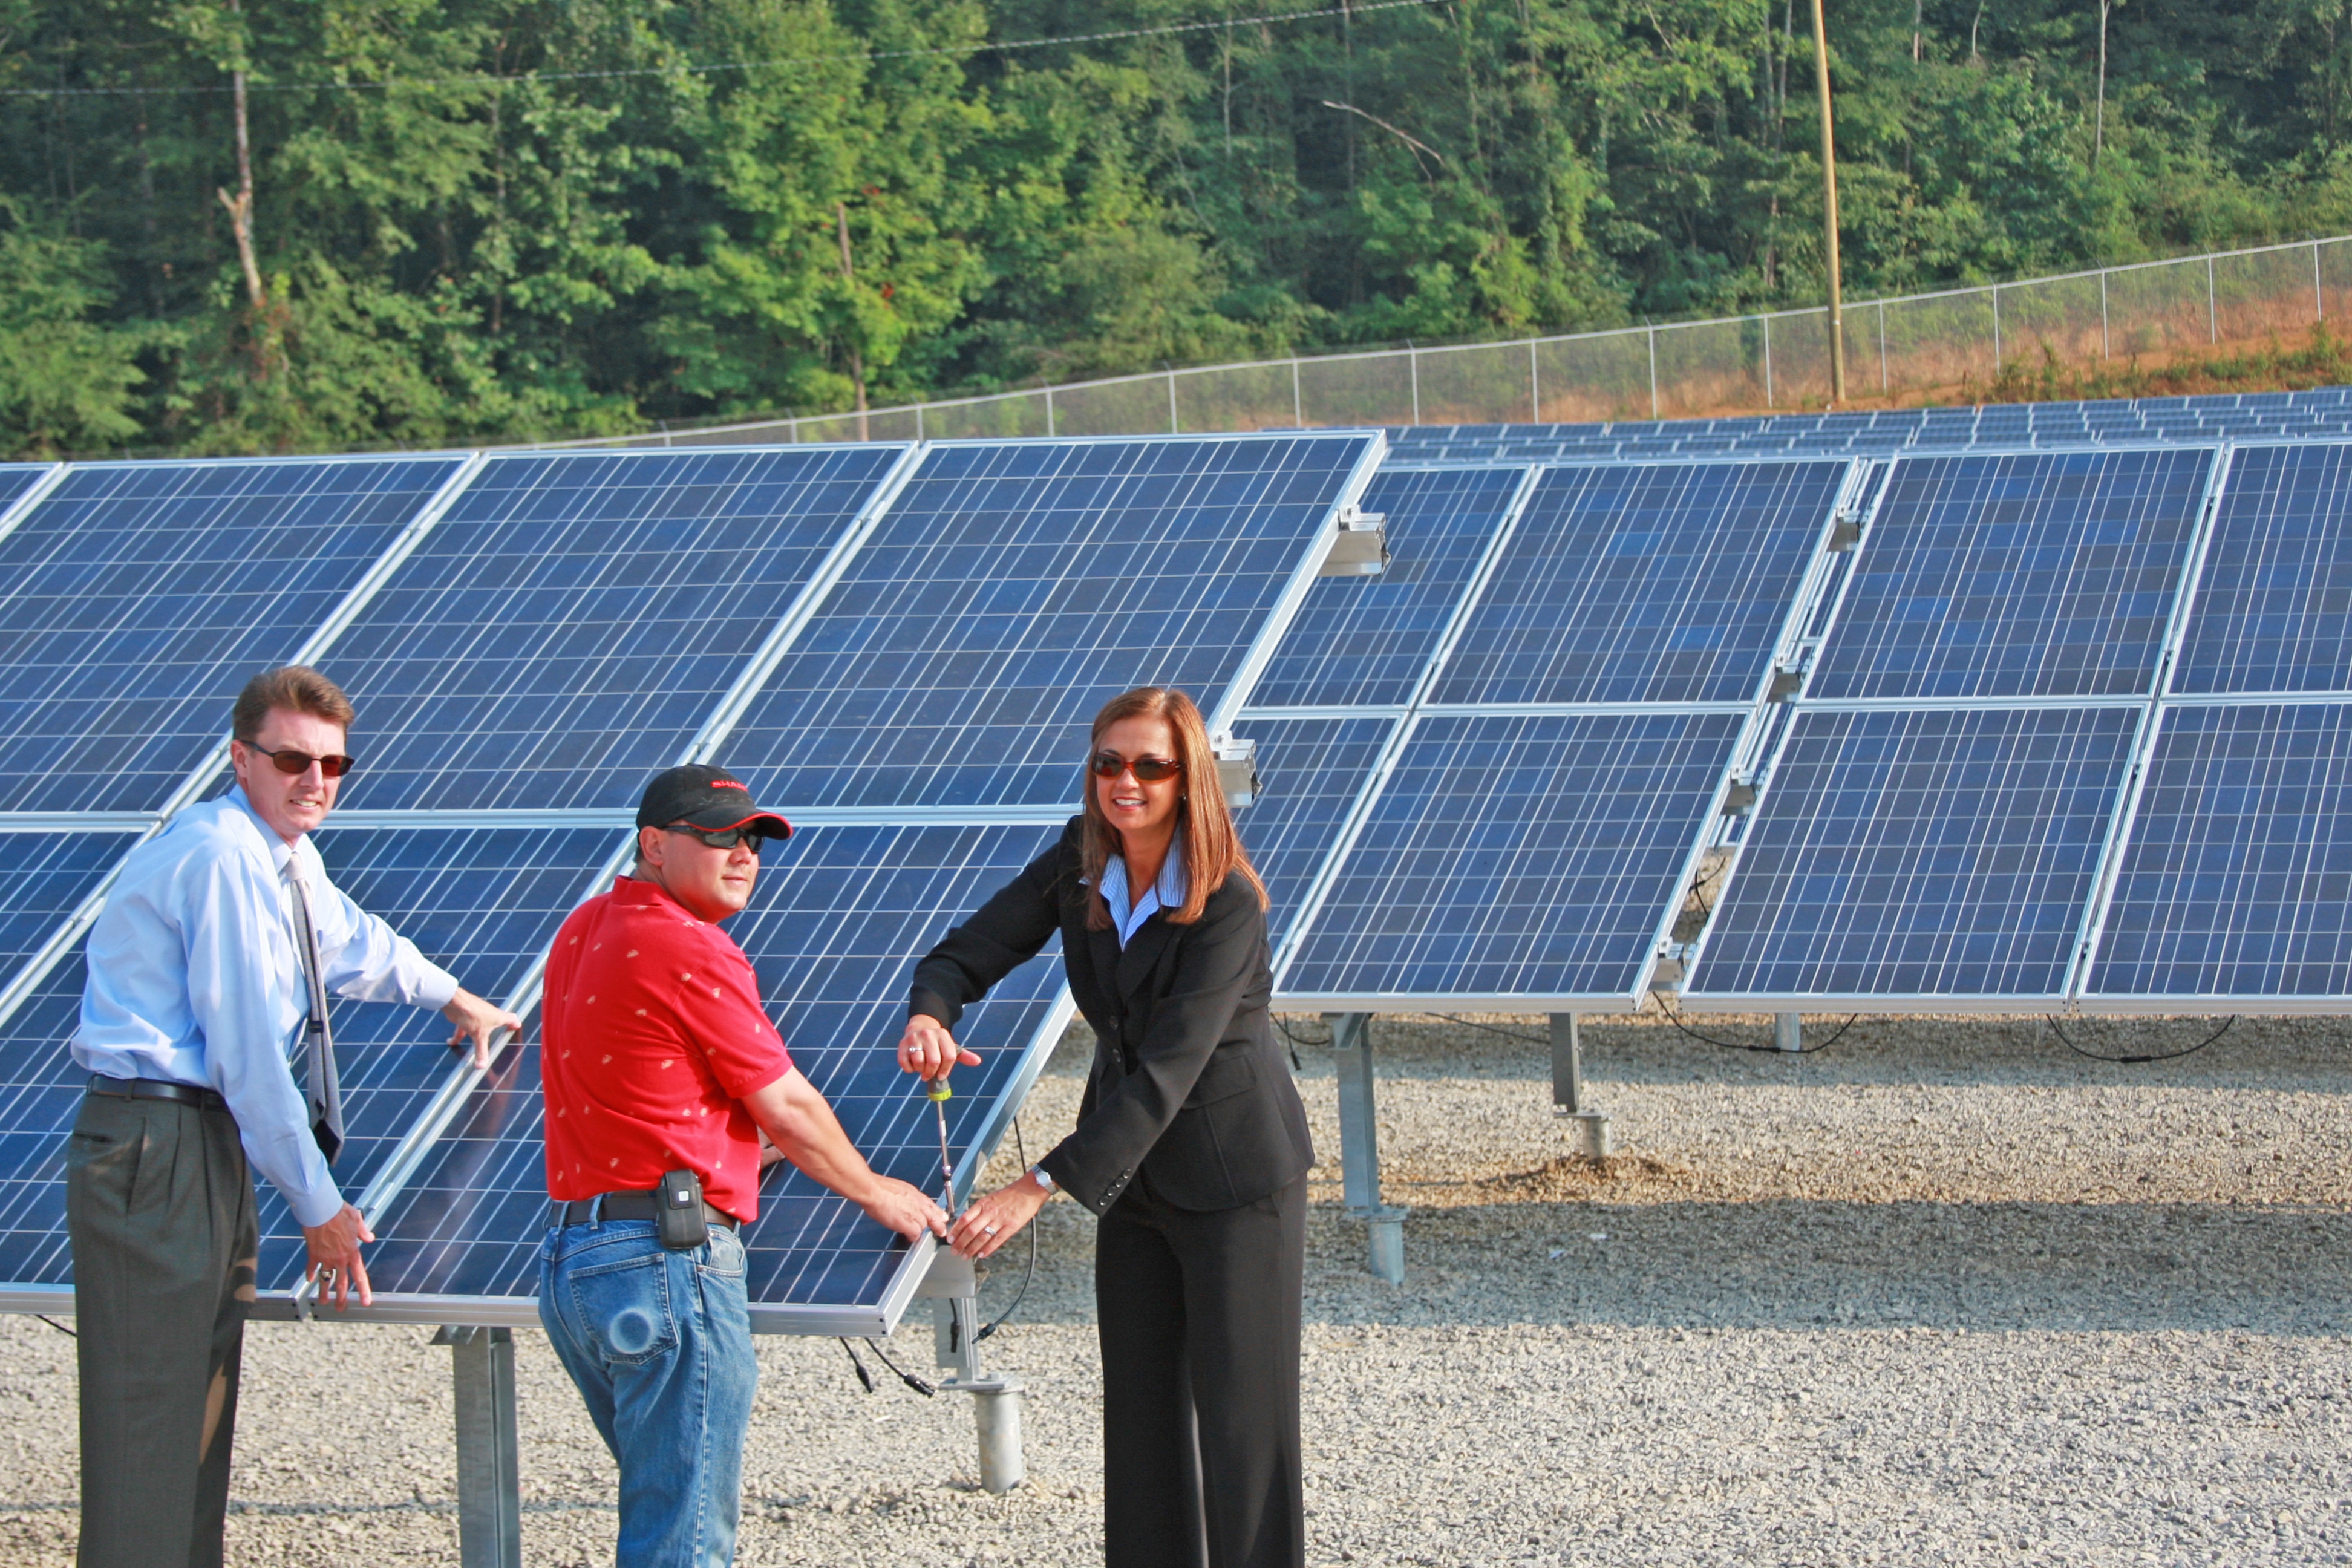 TVA Executive management install the last solar panel of the 4,608 SHARP solar panels Image